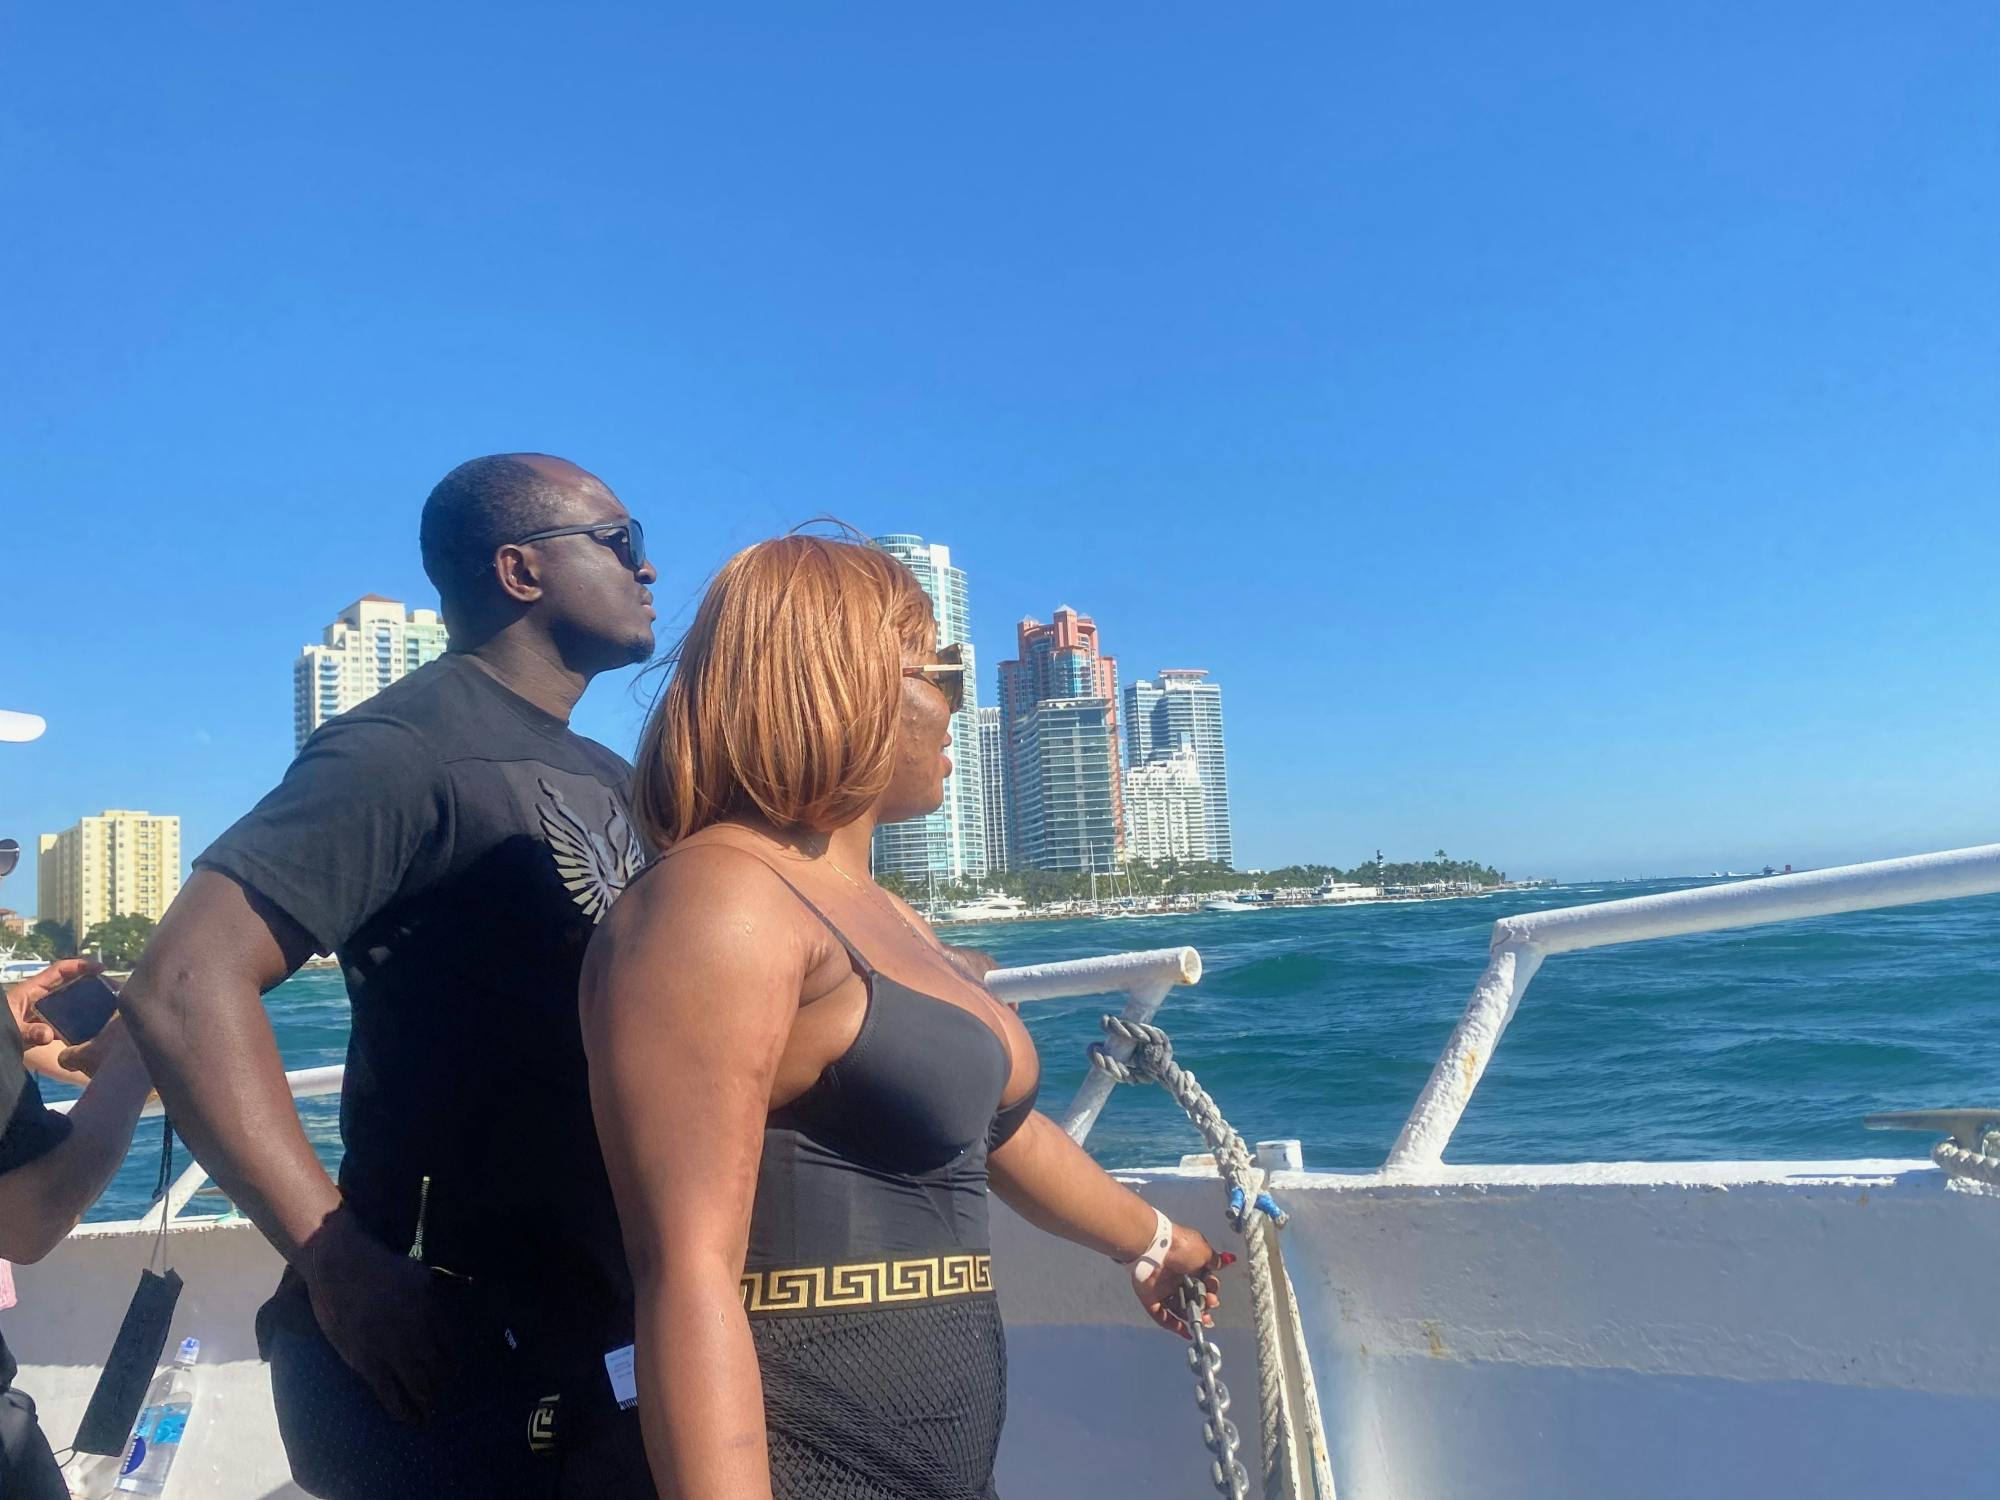 90-minütige Millionaire's Row-Kreuzfahrt durch Miami mit Hop-on-Hop-off-Bustour